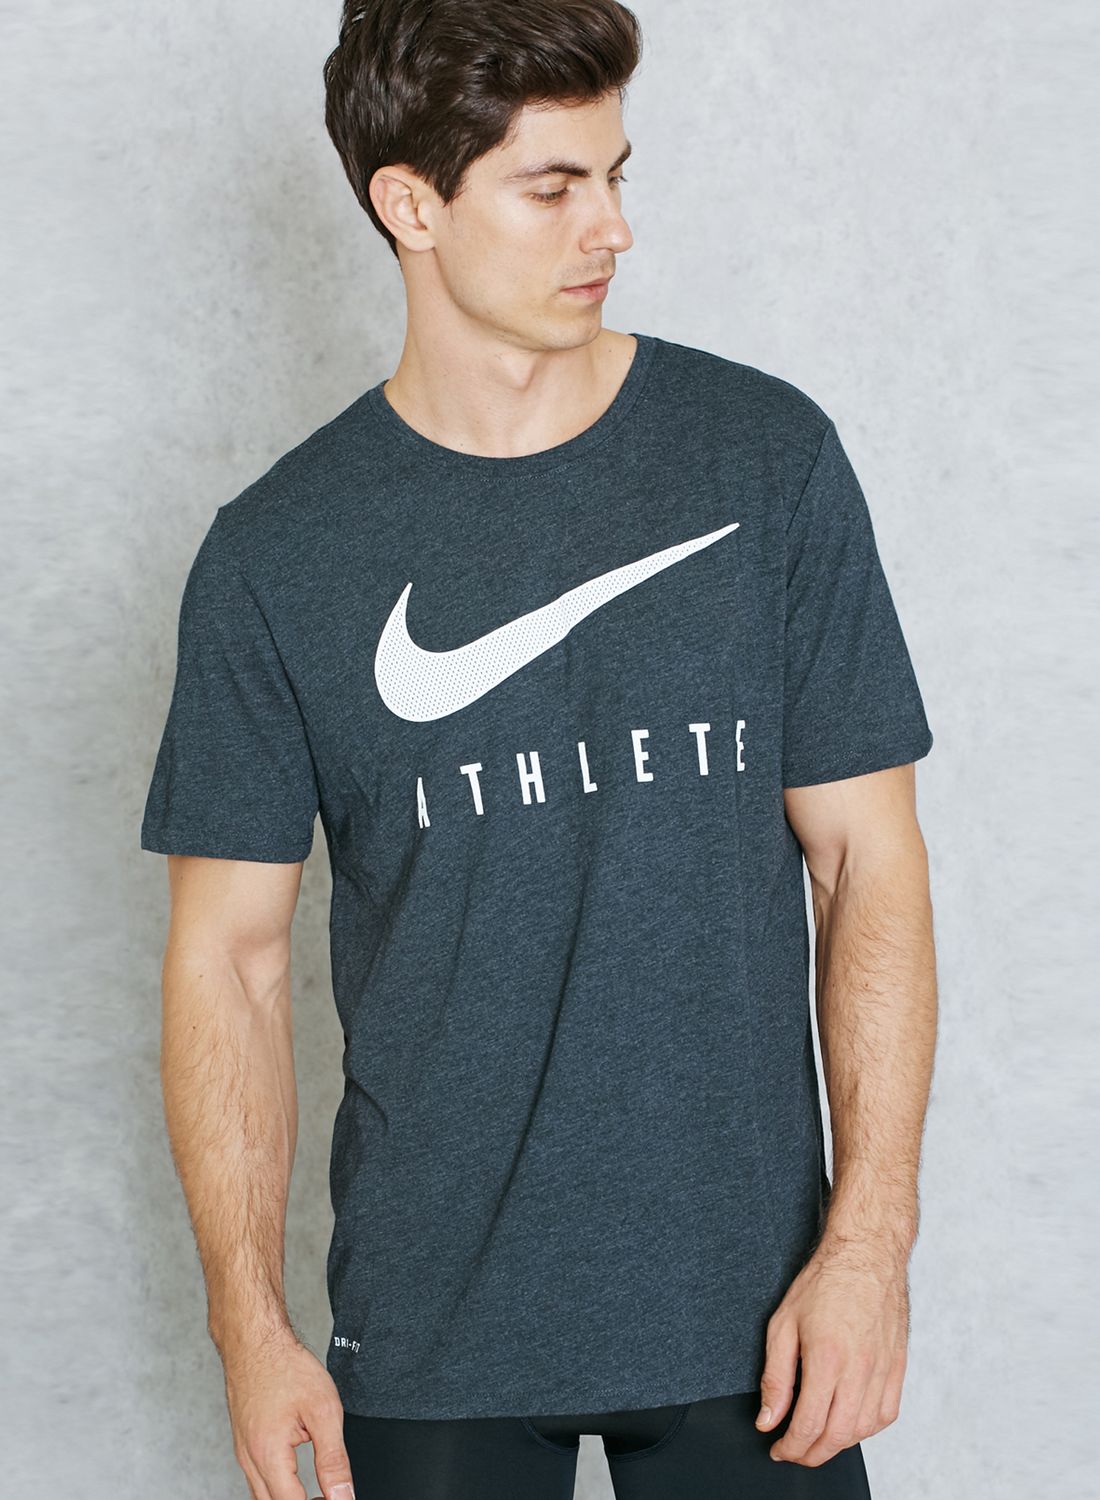 Nike Dark DB Mesh Swoosh Athlete T-Shirt for Men in UAE